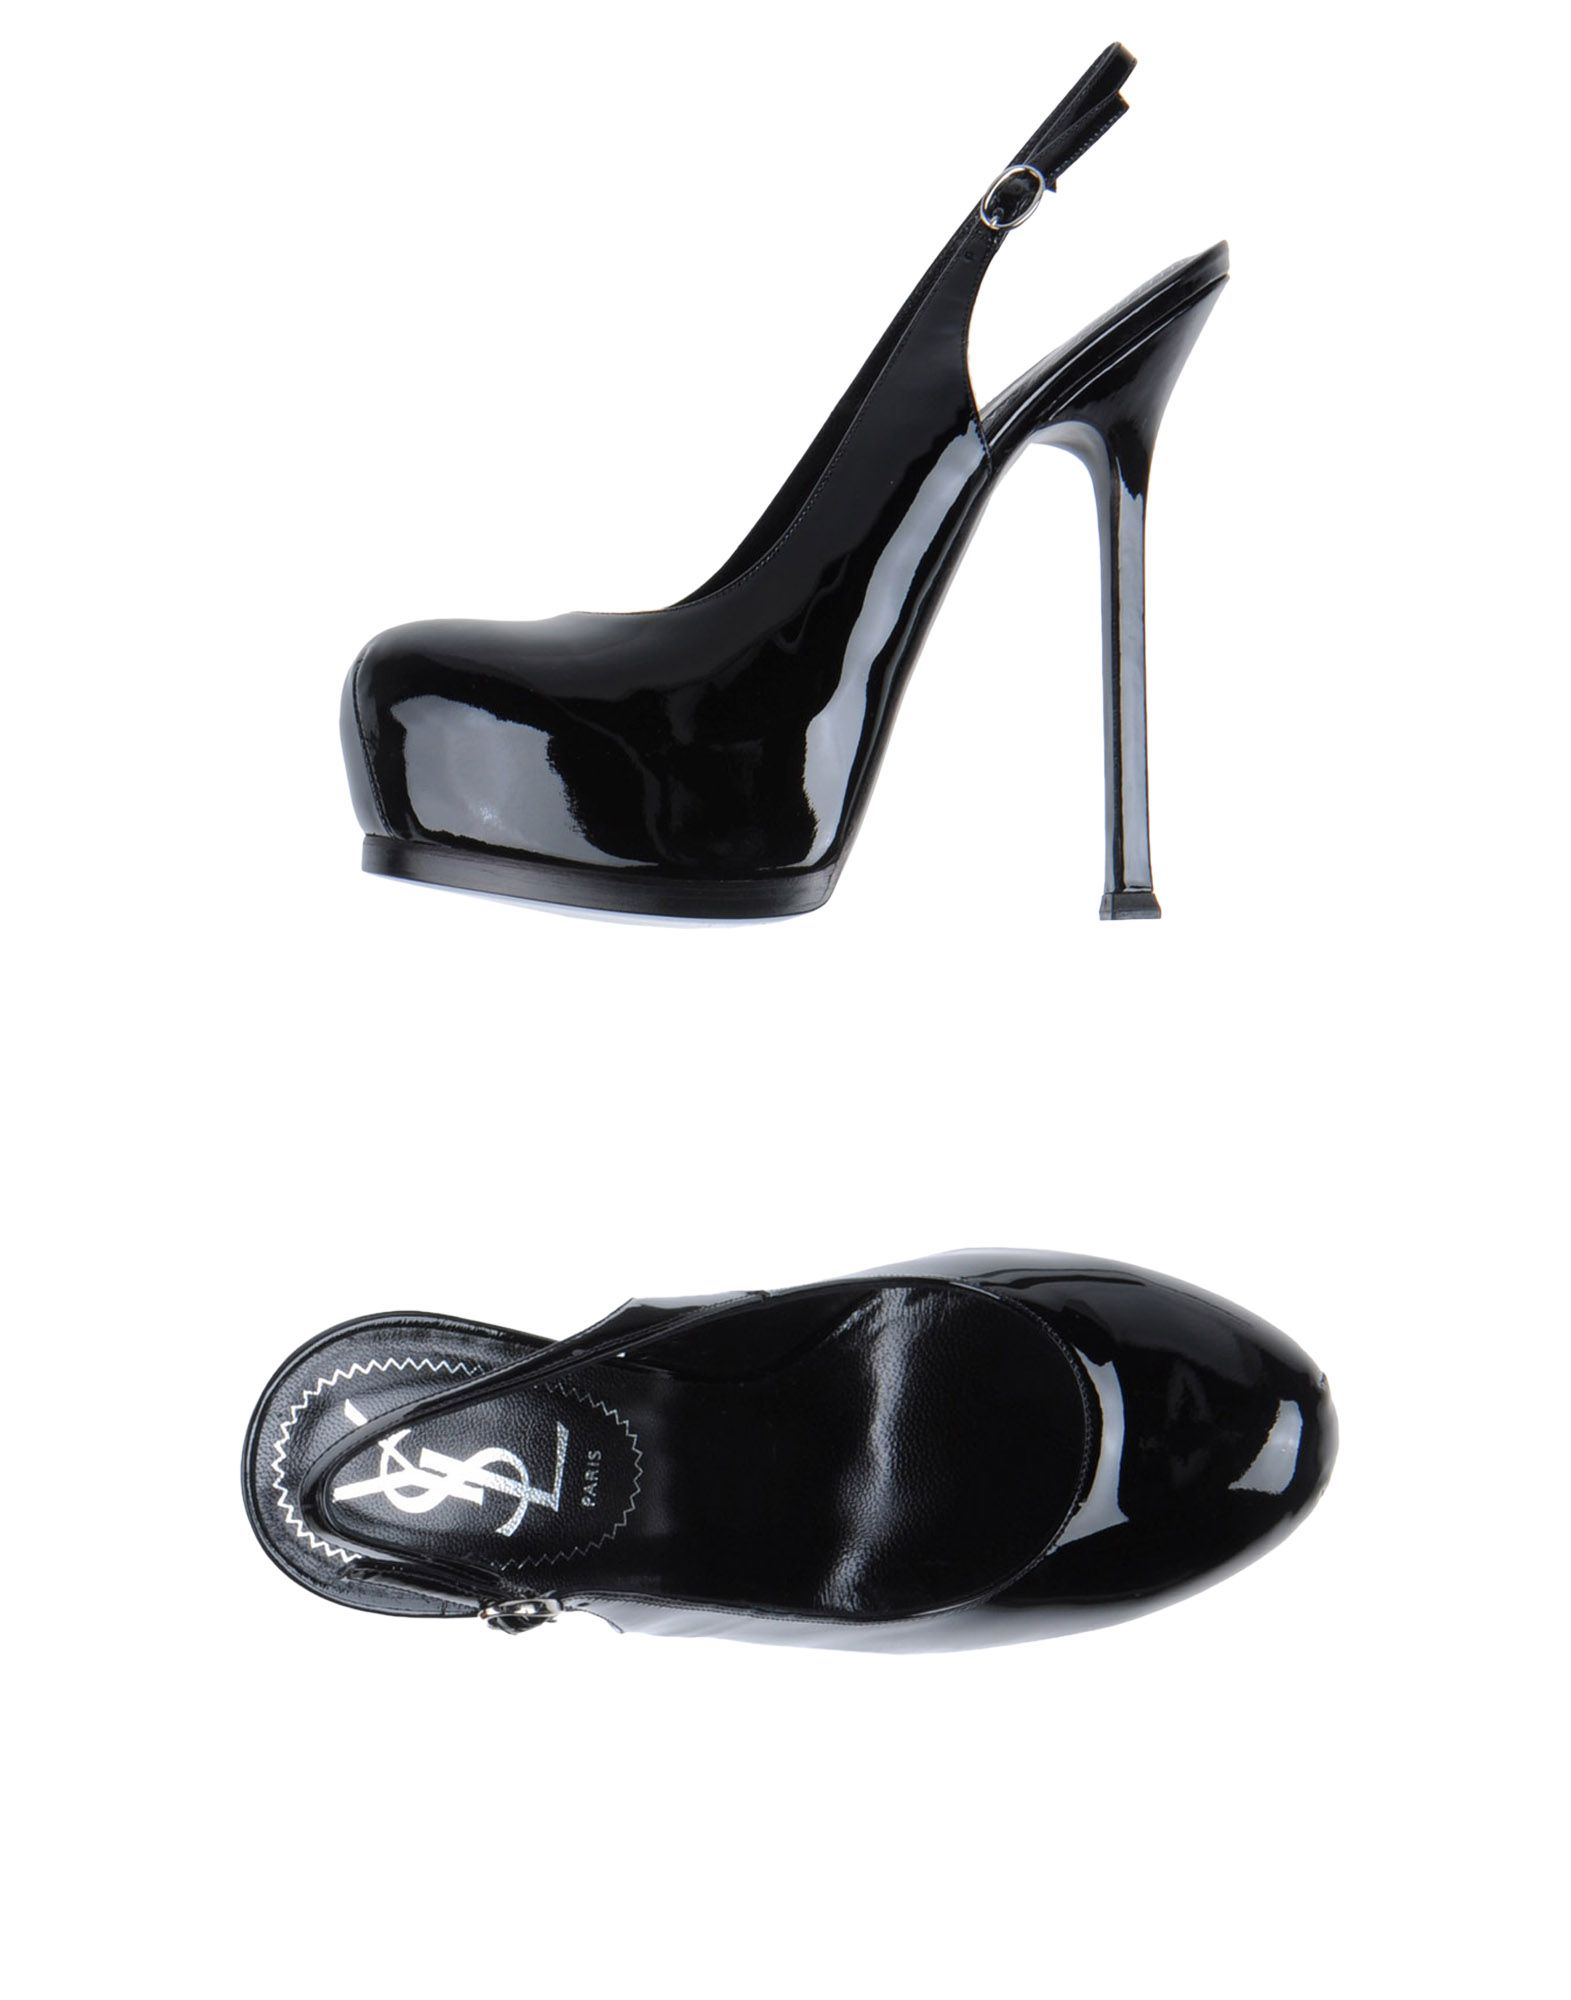 Foto Yves Saint Laurent Rive Gauche Zapatos Abiertos Mujer Negro foto 825108